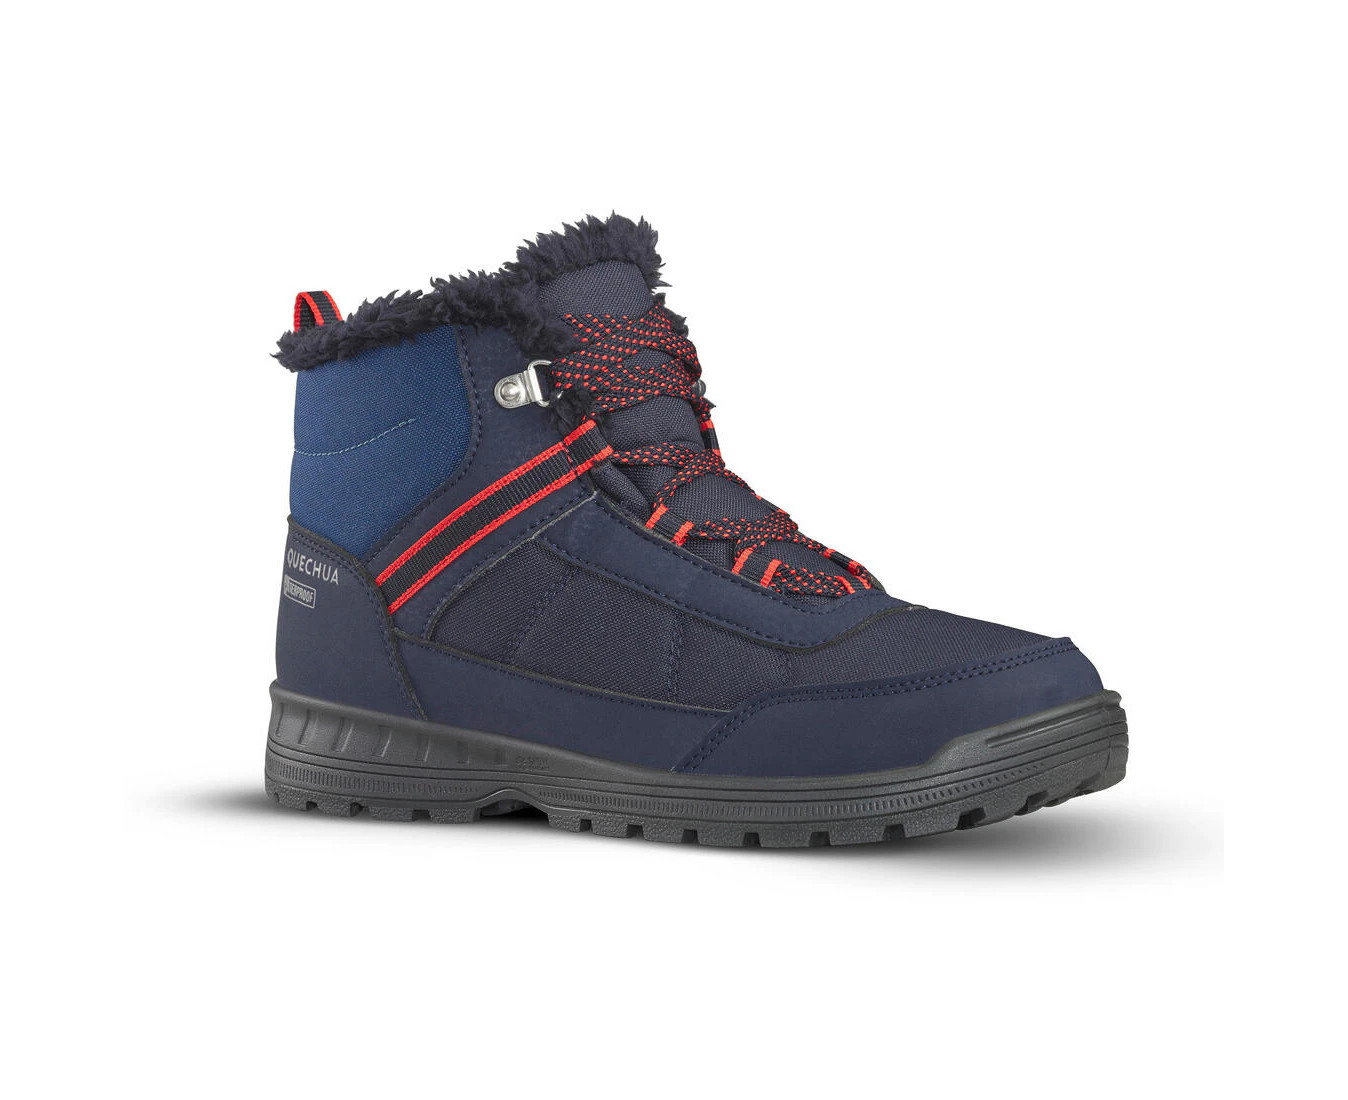 DECATHLON QUECHUA Men's Snow Hiking Boots High Laced Waterproof